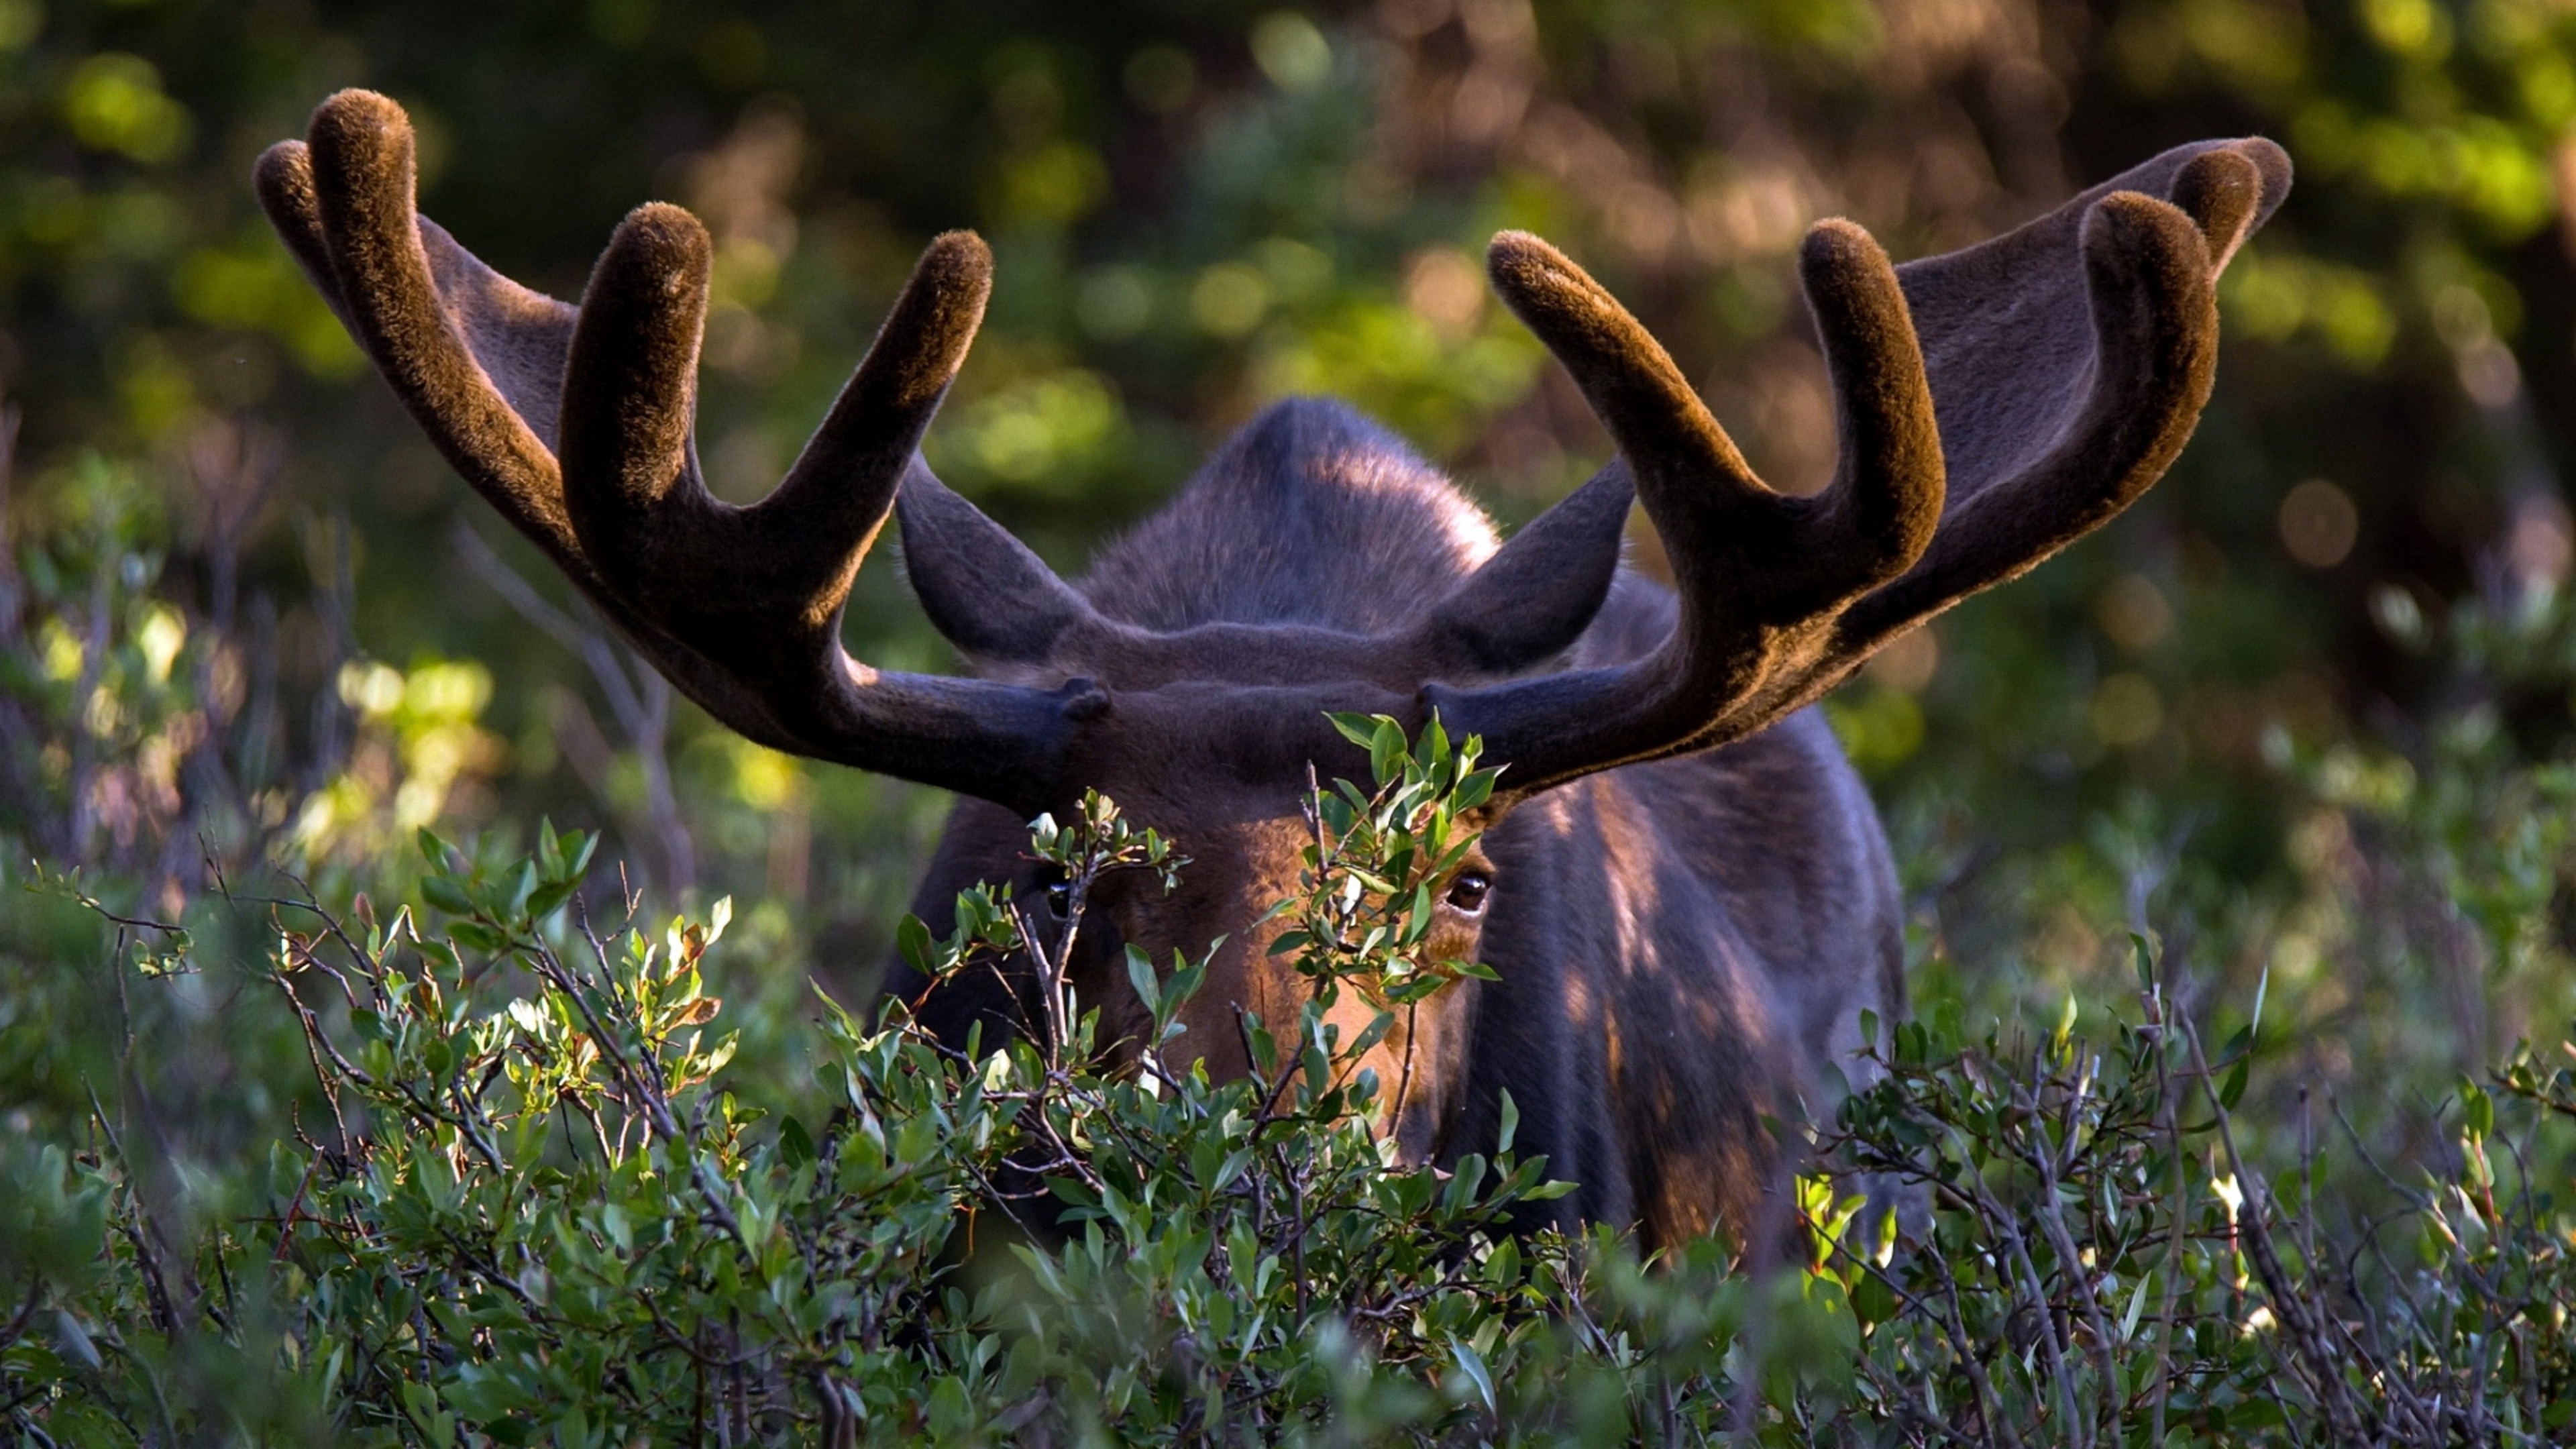 Moose in the wild, Pristine nature, HD wilderness, Majestic creatures, 3840x2160 4K Desktop